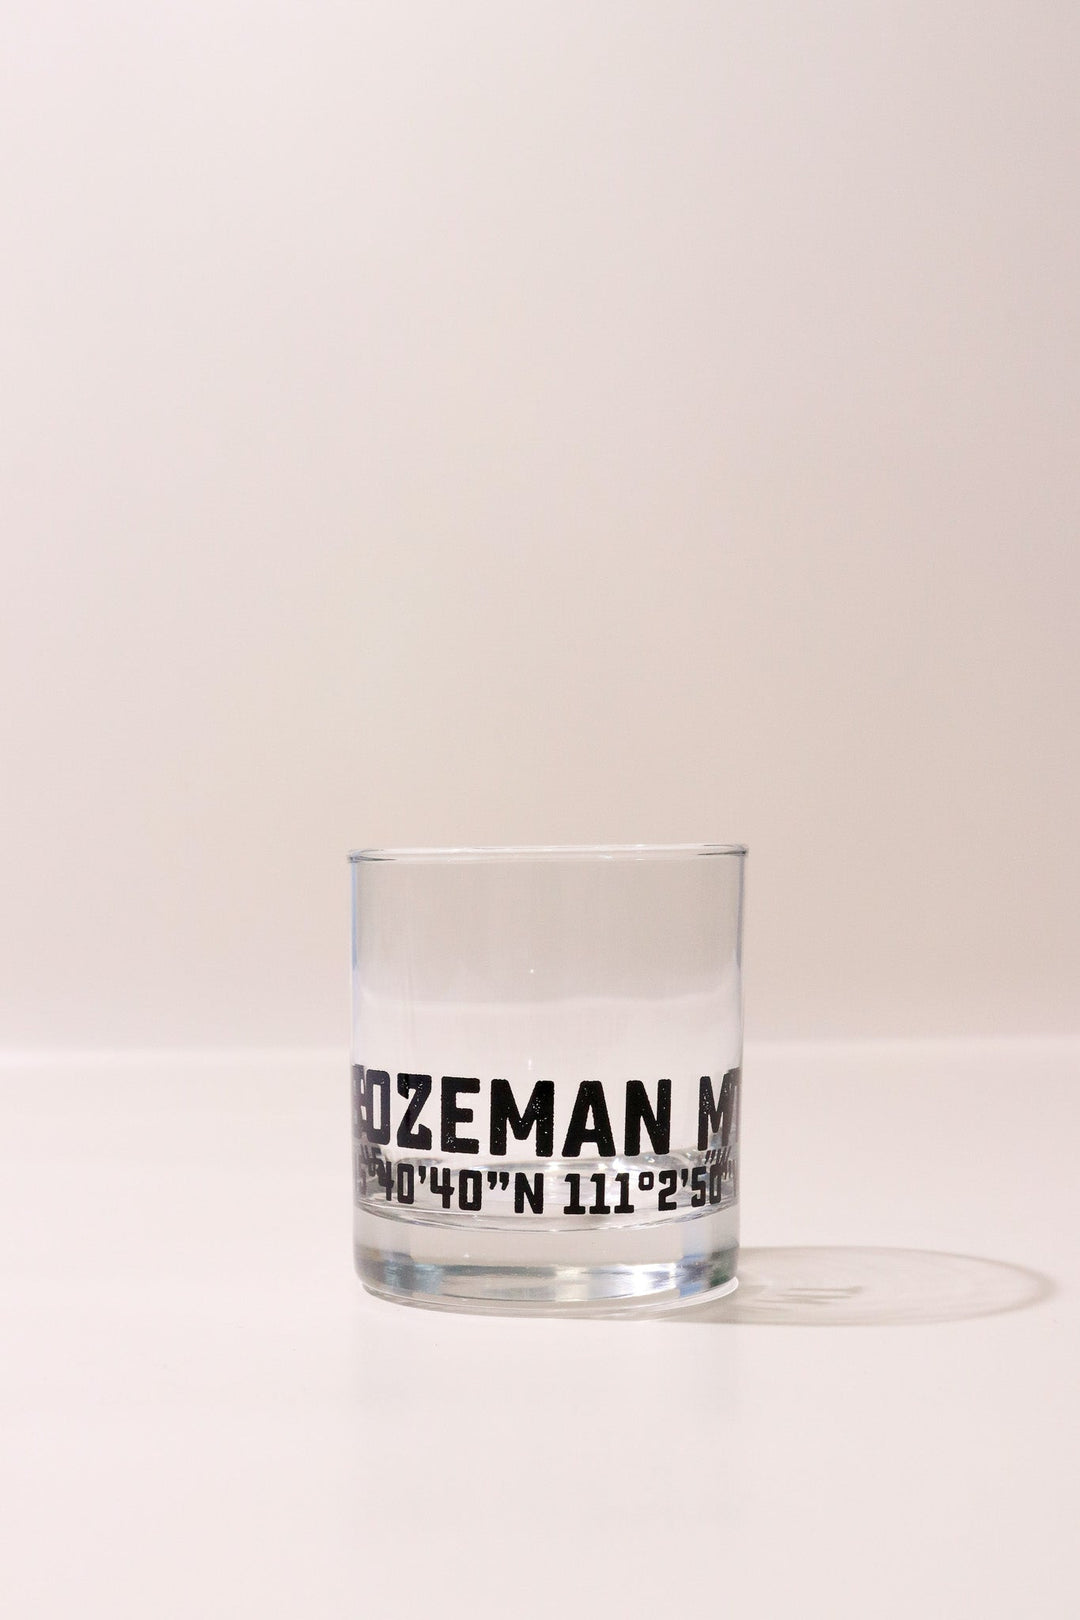 Bozeman Coordinates Rocks Glass - Heyday